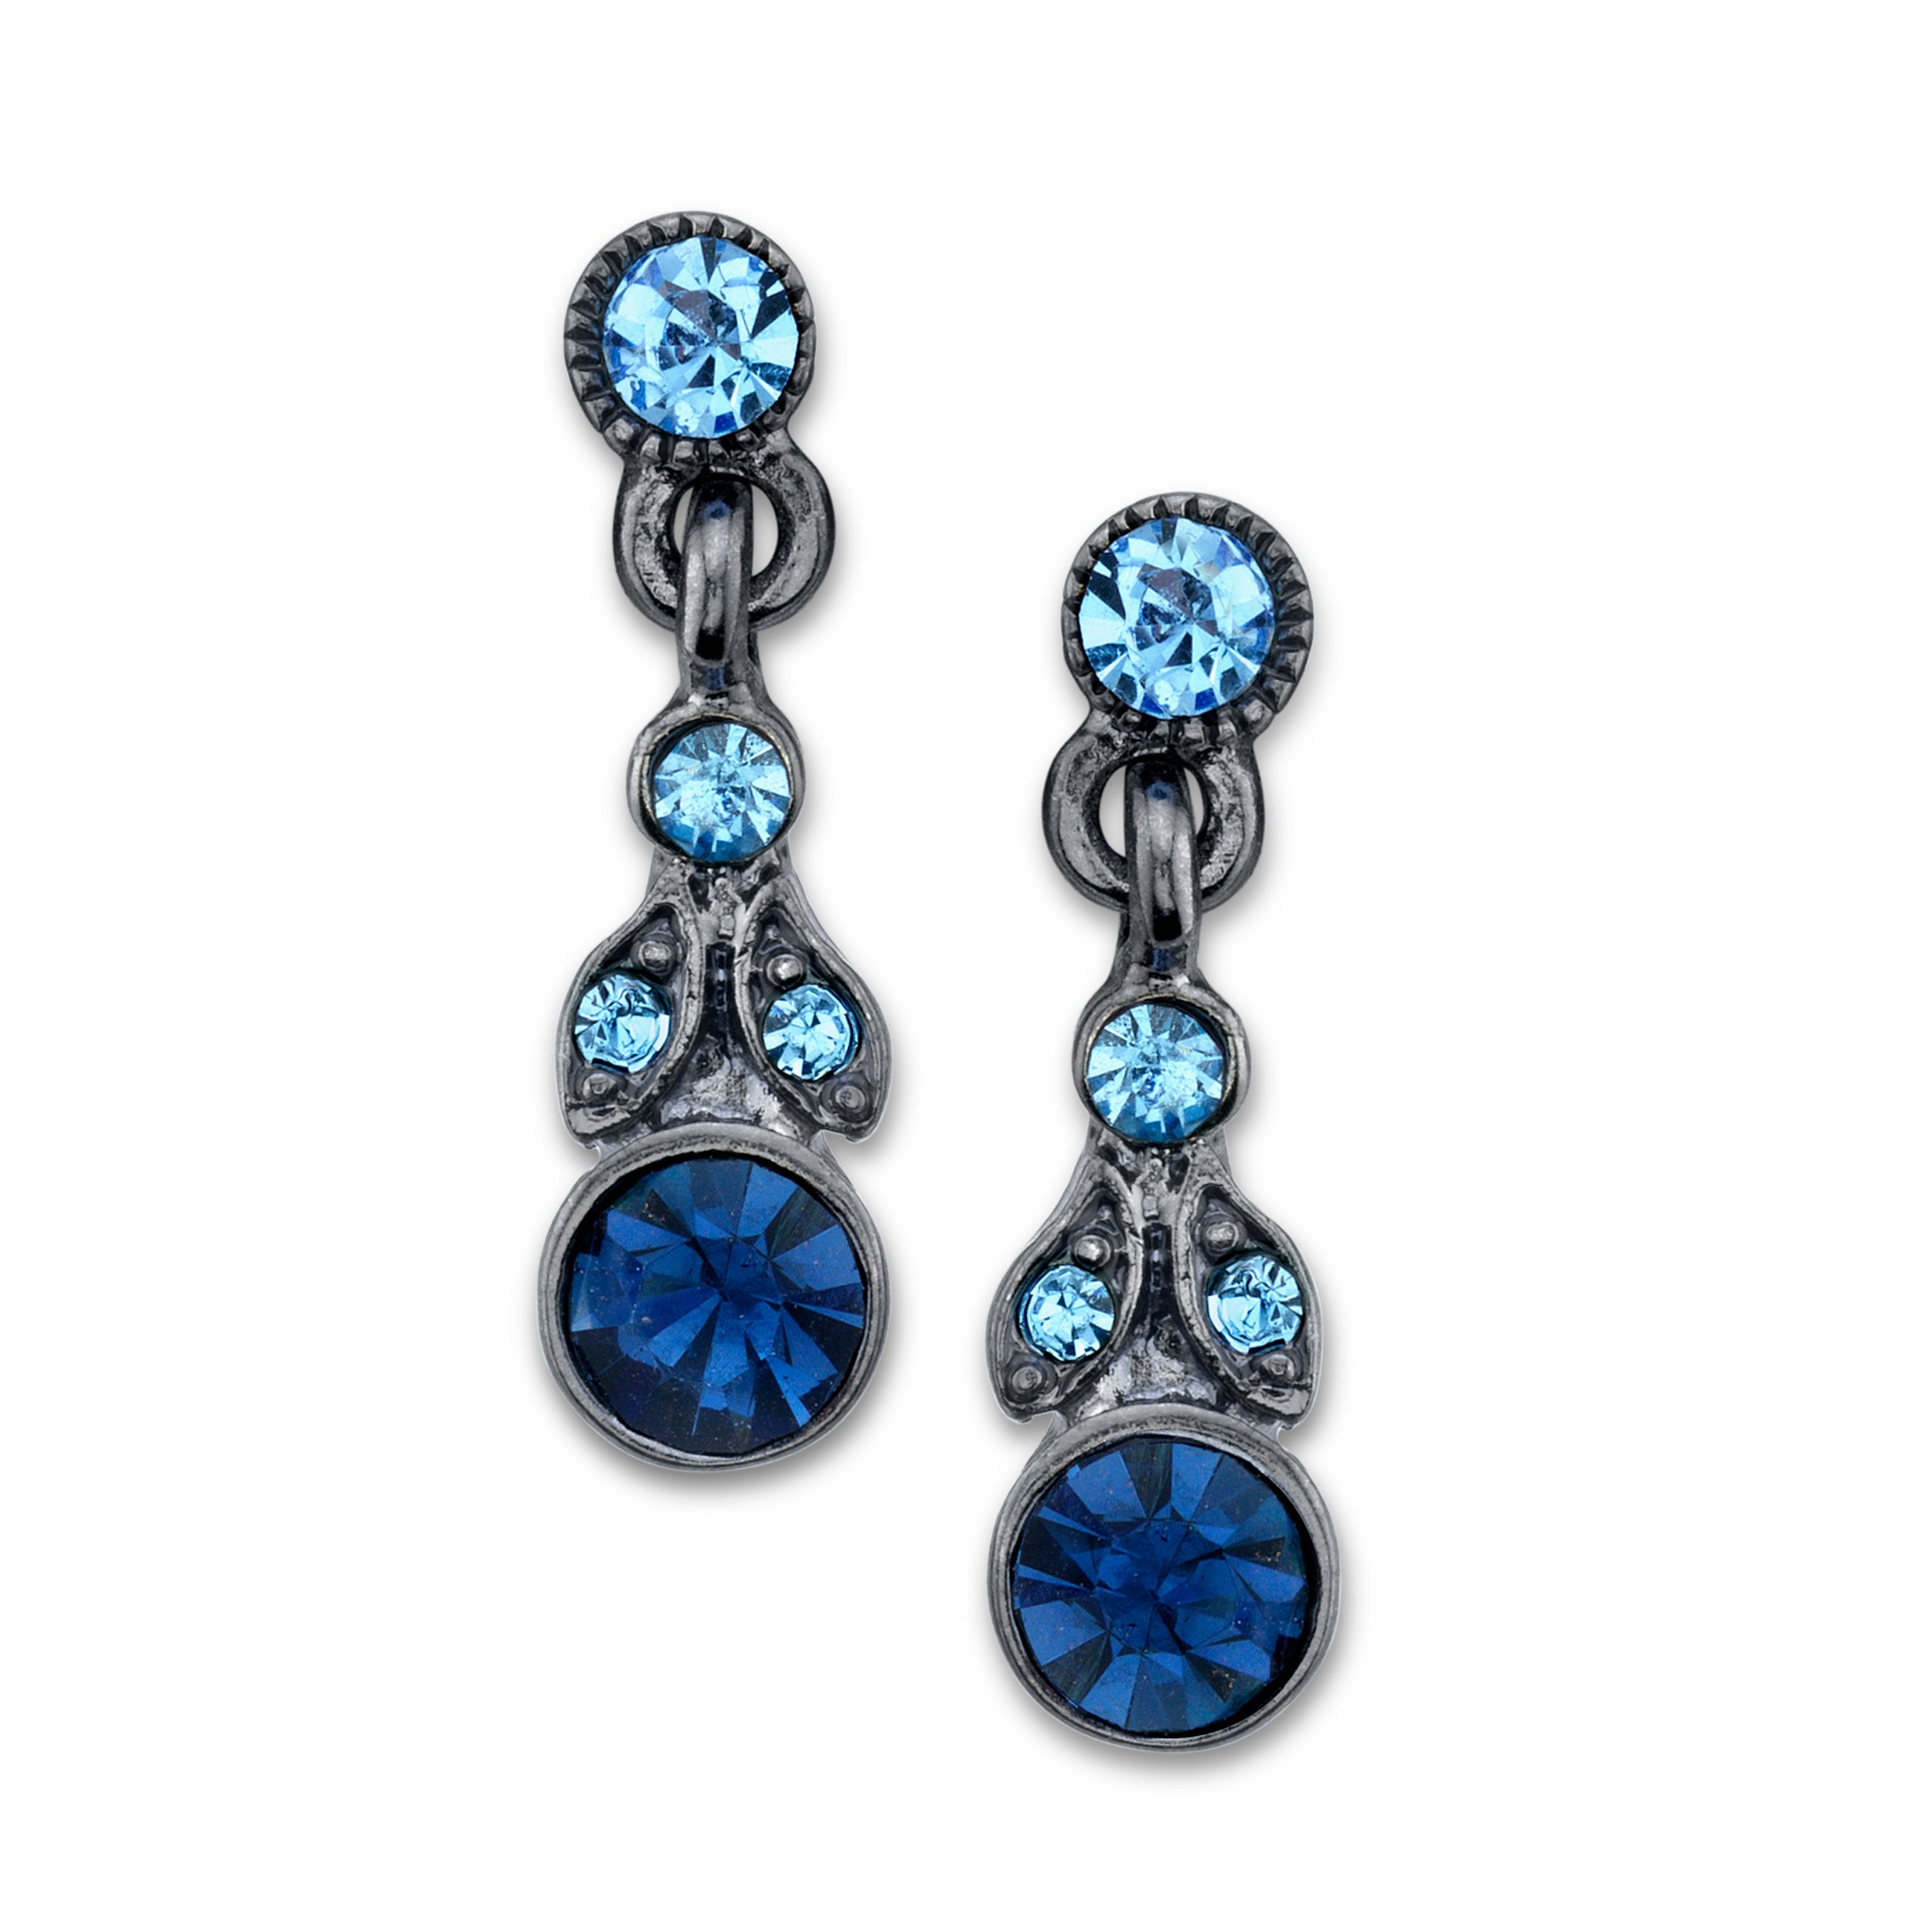 Super long bar dangle earrings, cobalt blue stone jewelry - Ruby Lane